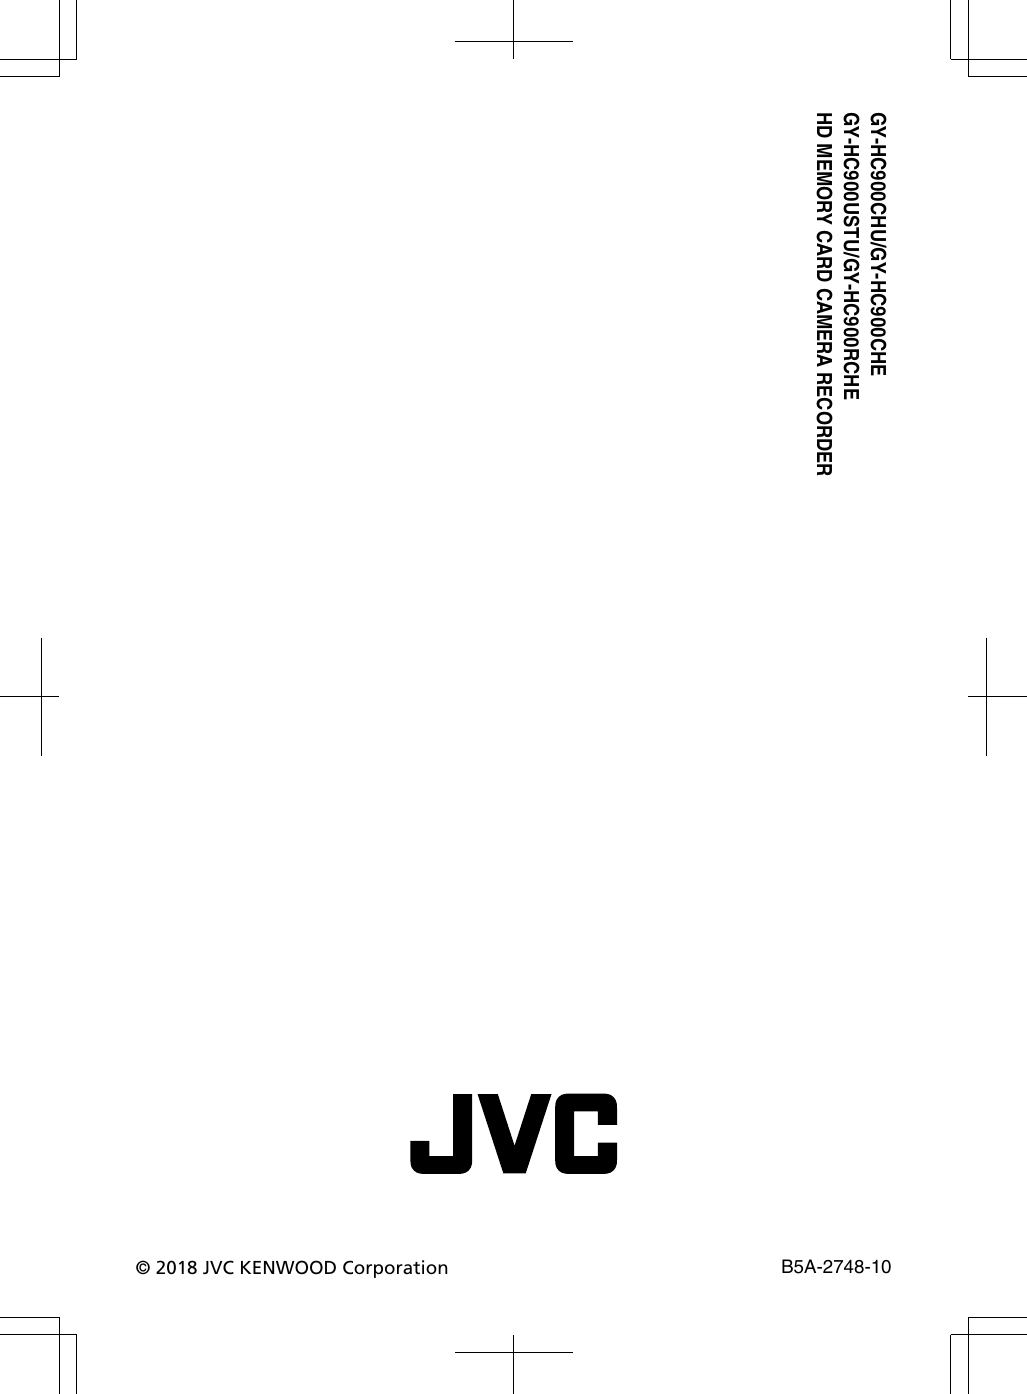 ƖˀʷʷƭƖˀʷʷƖˀʷʷƭƖˀʷʷ© 2018 JVC KENWOOD Corporation ʼƖʹʾʻʿƖʸʷ